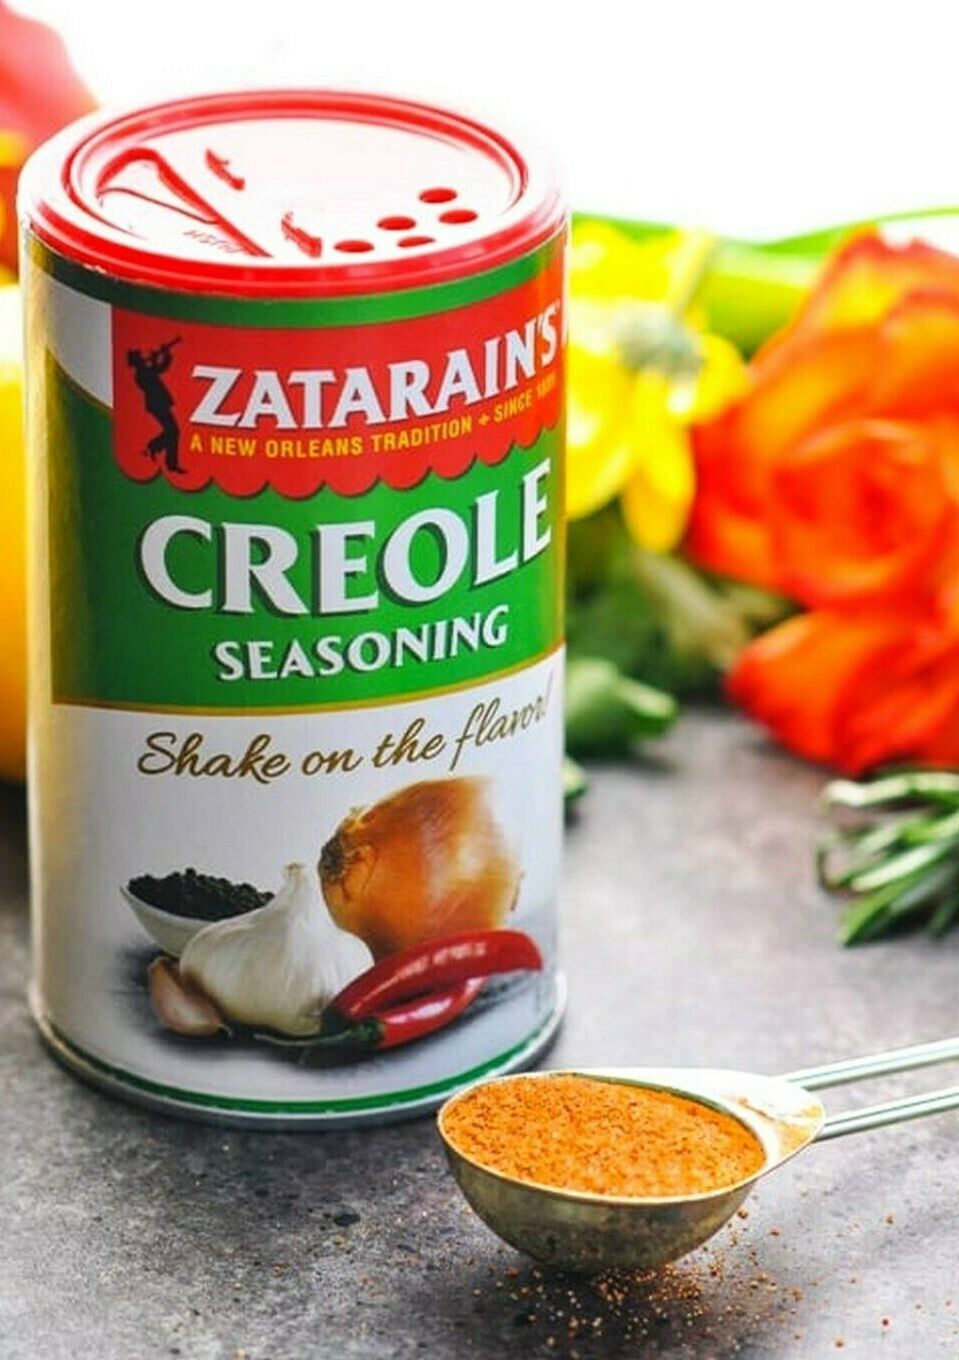 Primary image for Zatarain's New Orleans sTyLe CREOLE SEASONING cajun powder 8 oz ZATARAINS 12101